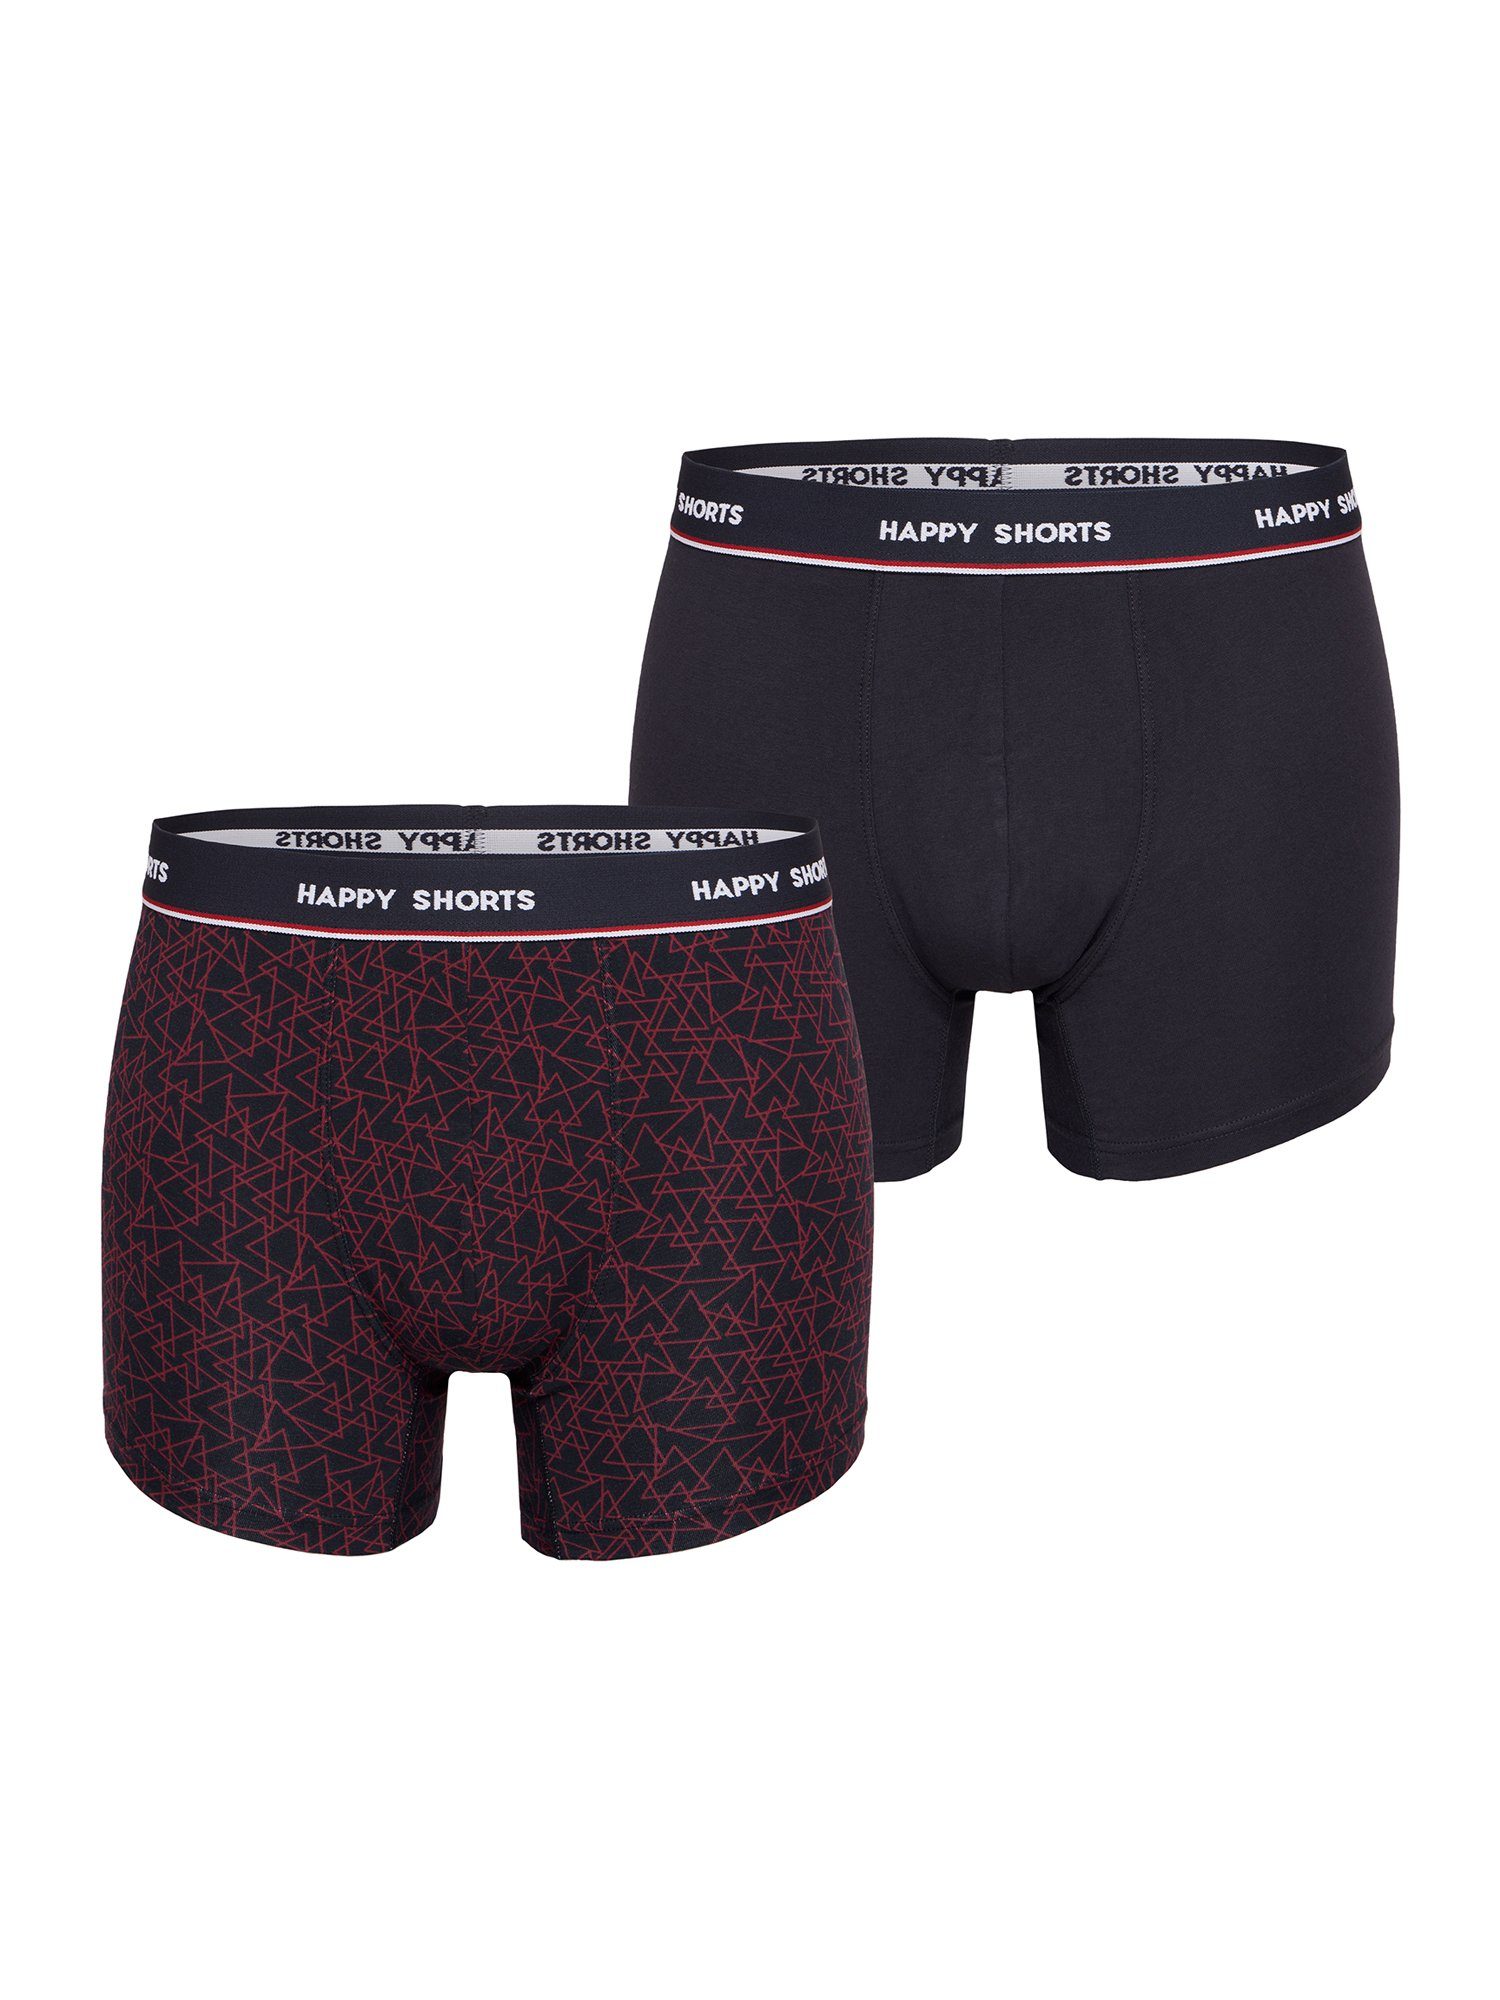 HAPPY SHORTS Retro Pants Trunks (2-St) Retro-Boxer Retro-shorts unterhose Red Triangles